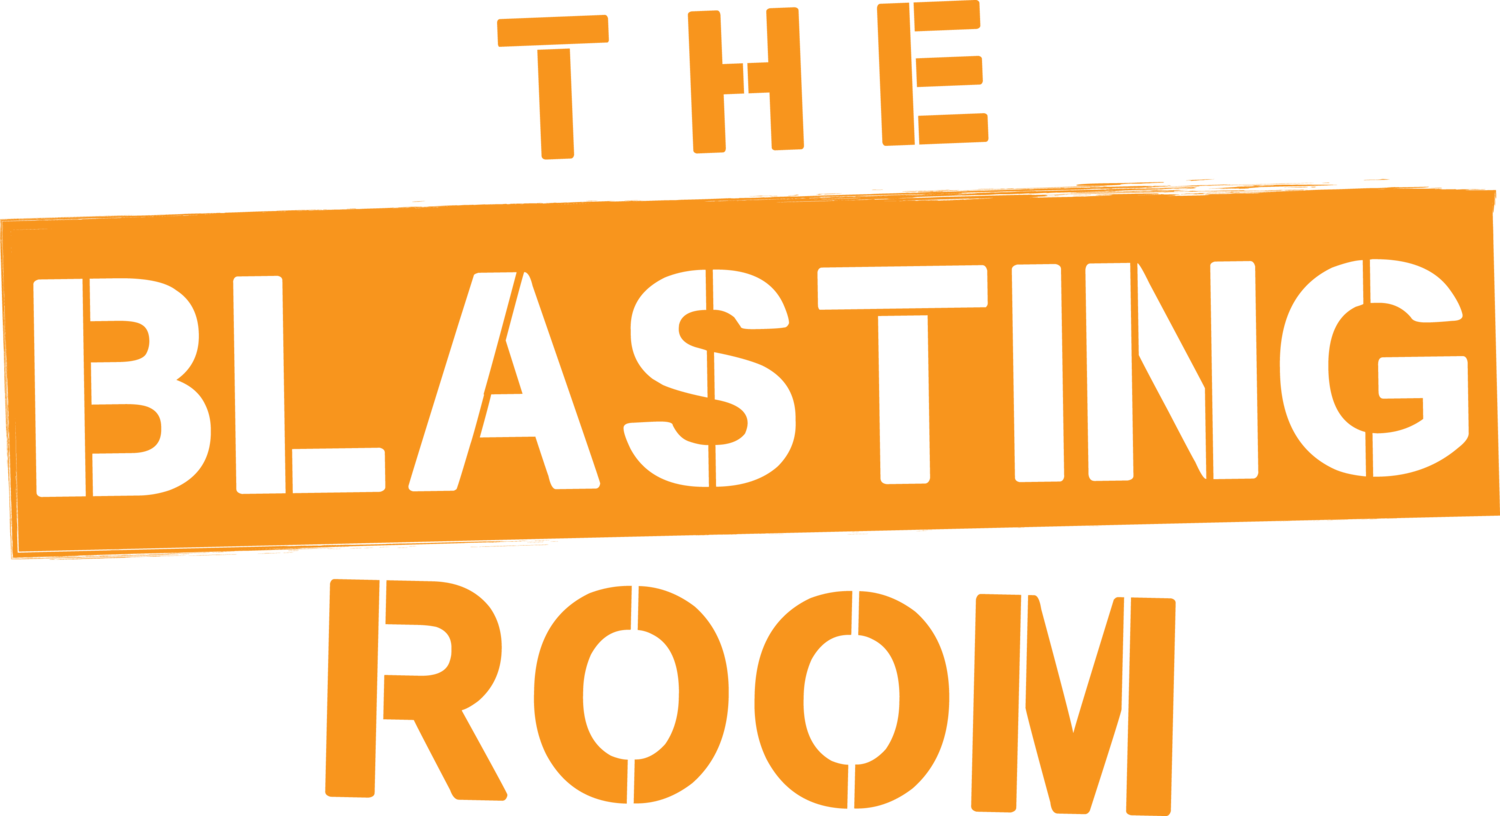 The Blasting Room